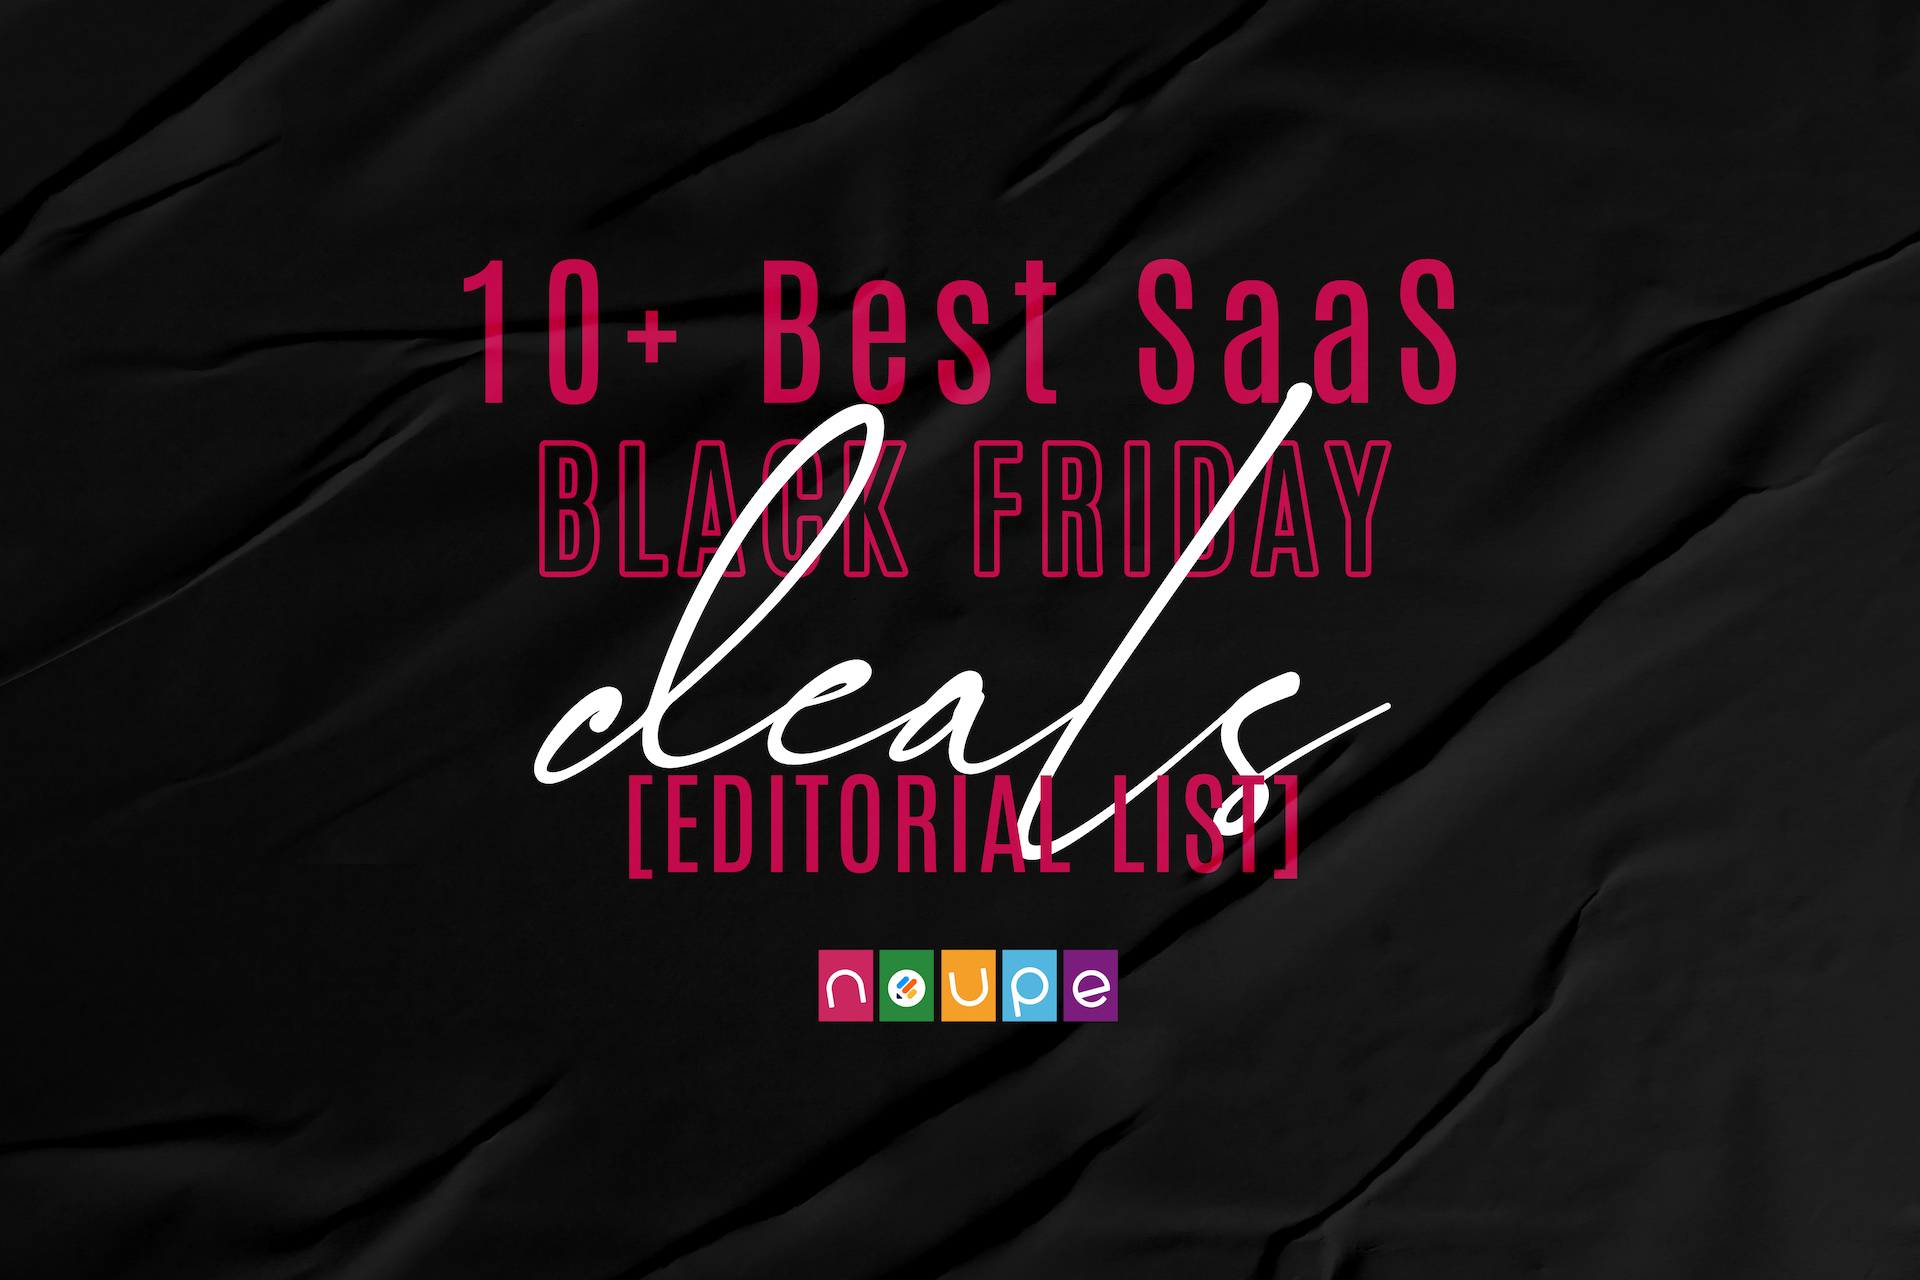 #10+ Best SaaS Black Friday Deals